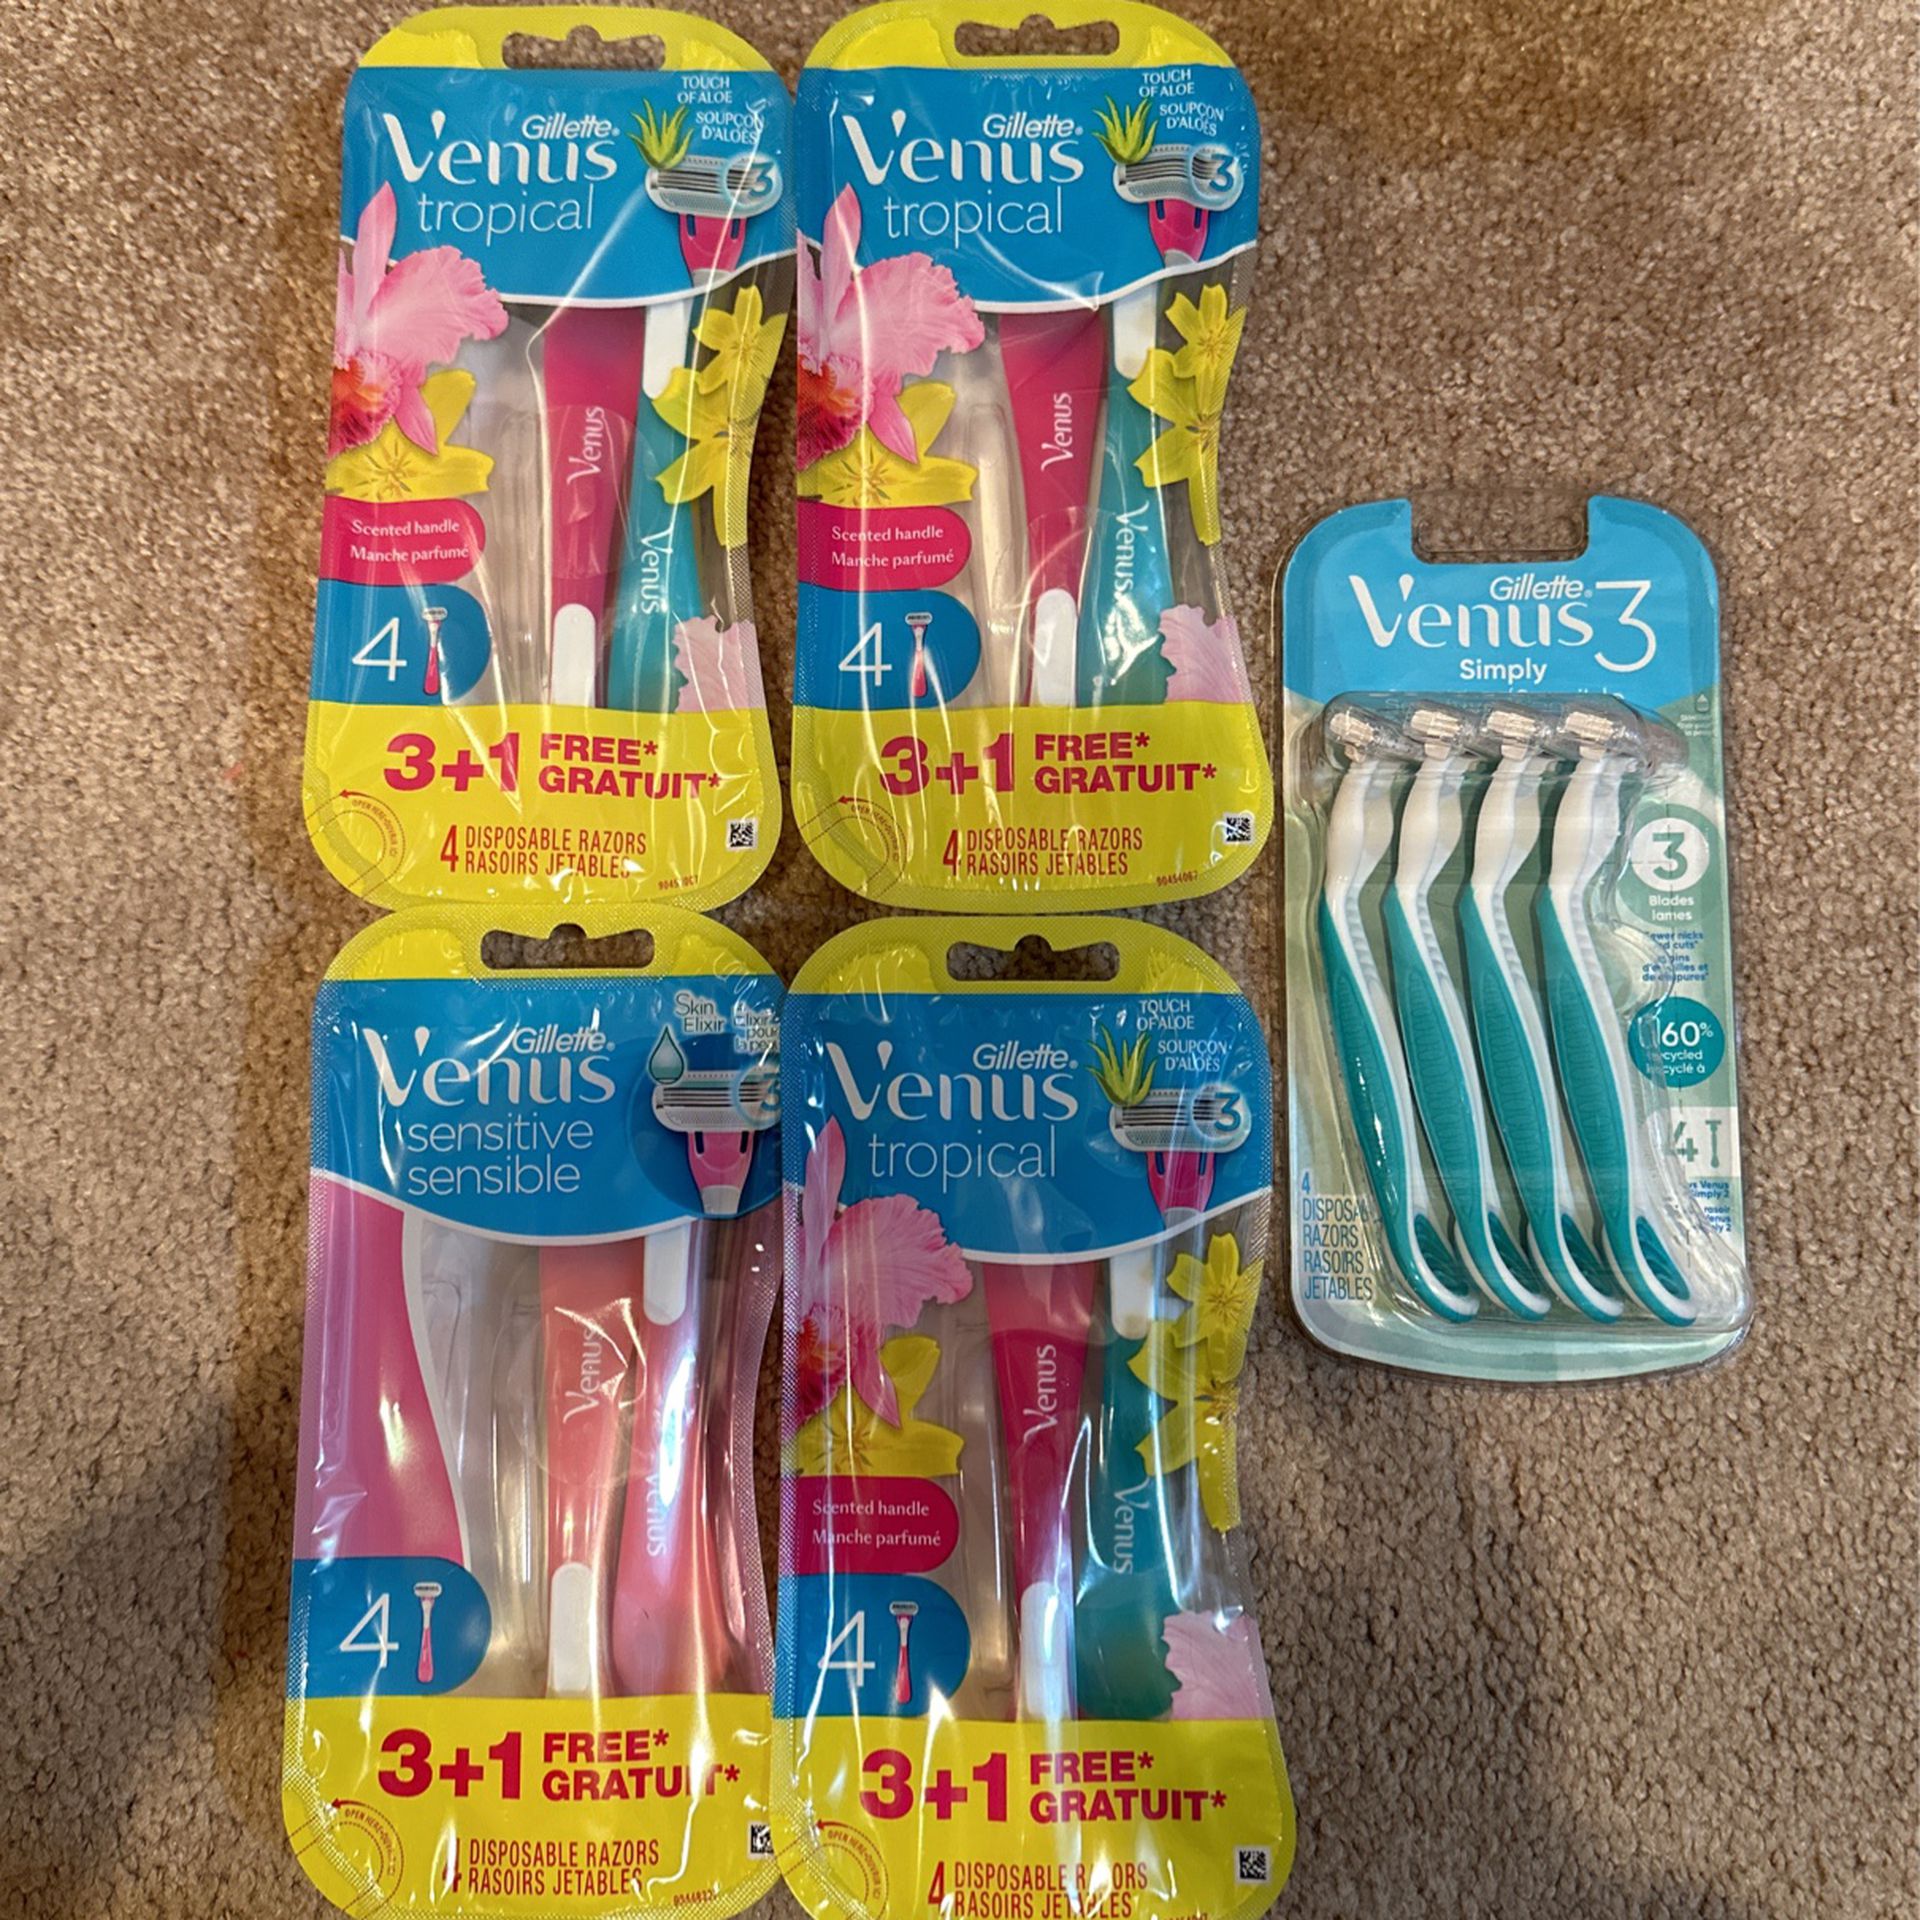 4-pack Venus razors: $4 each